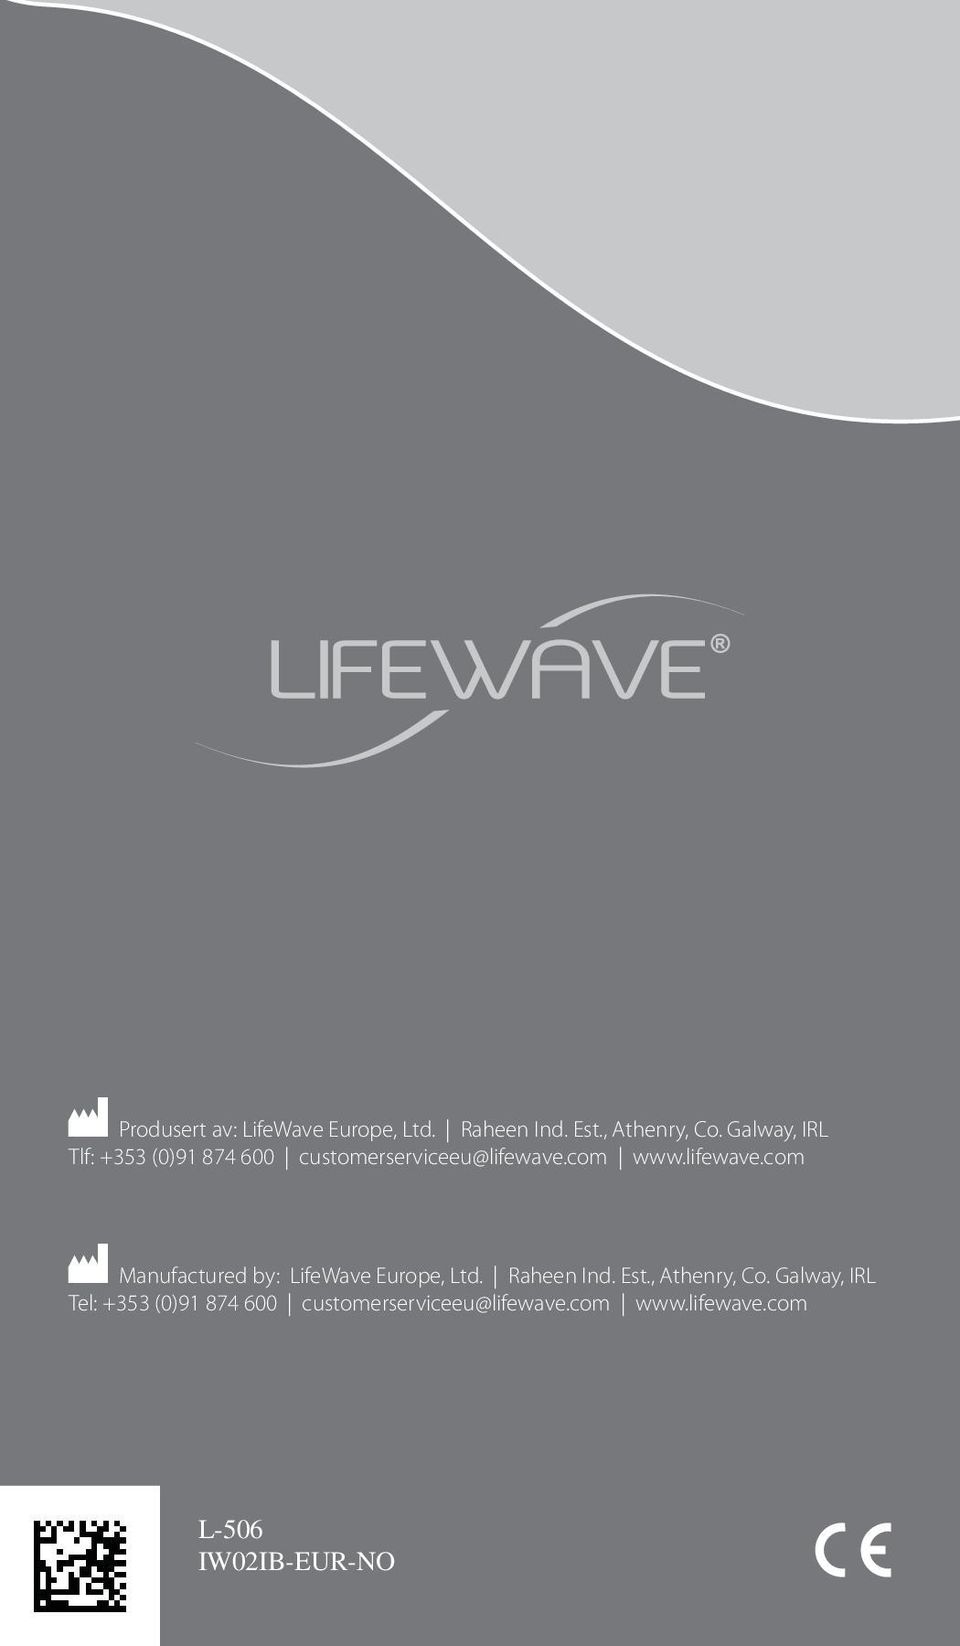 com www.lifewave.com M Manufactured by: LifeWave Europe, Ltd. Raheen Ind. Est.